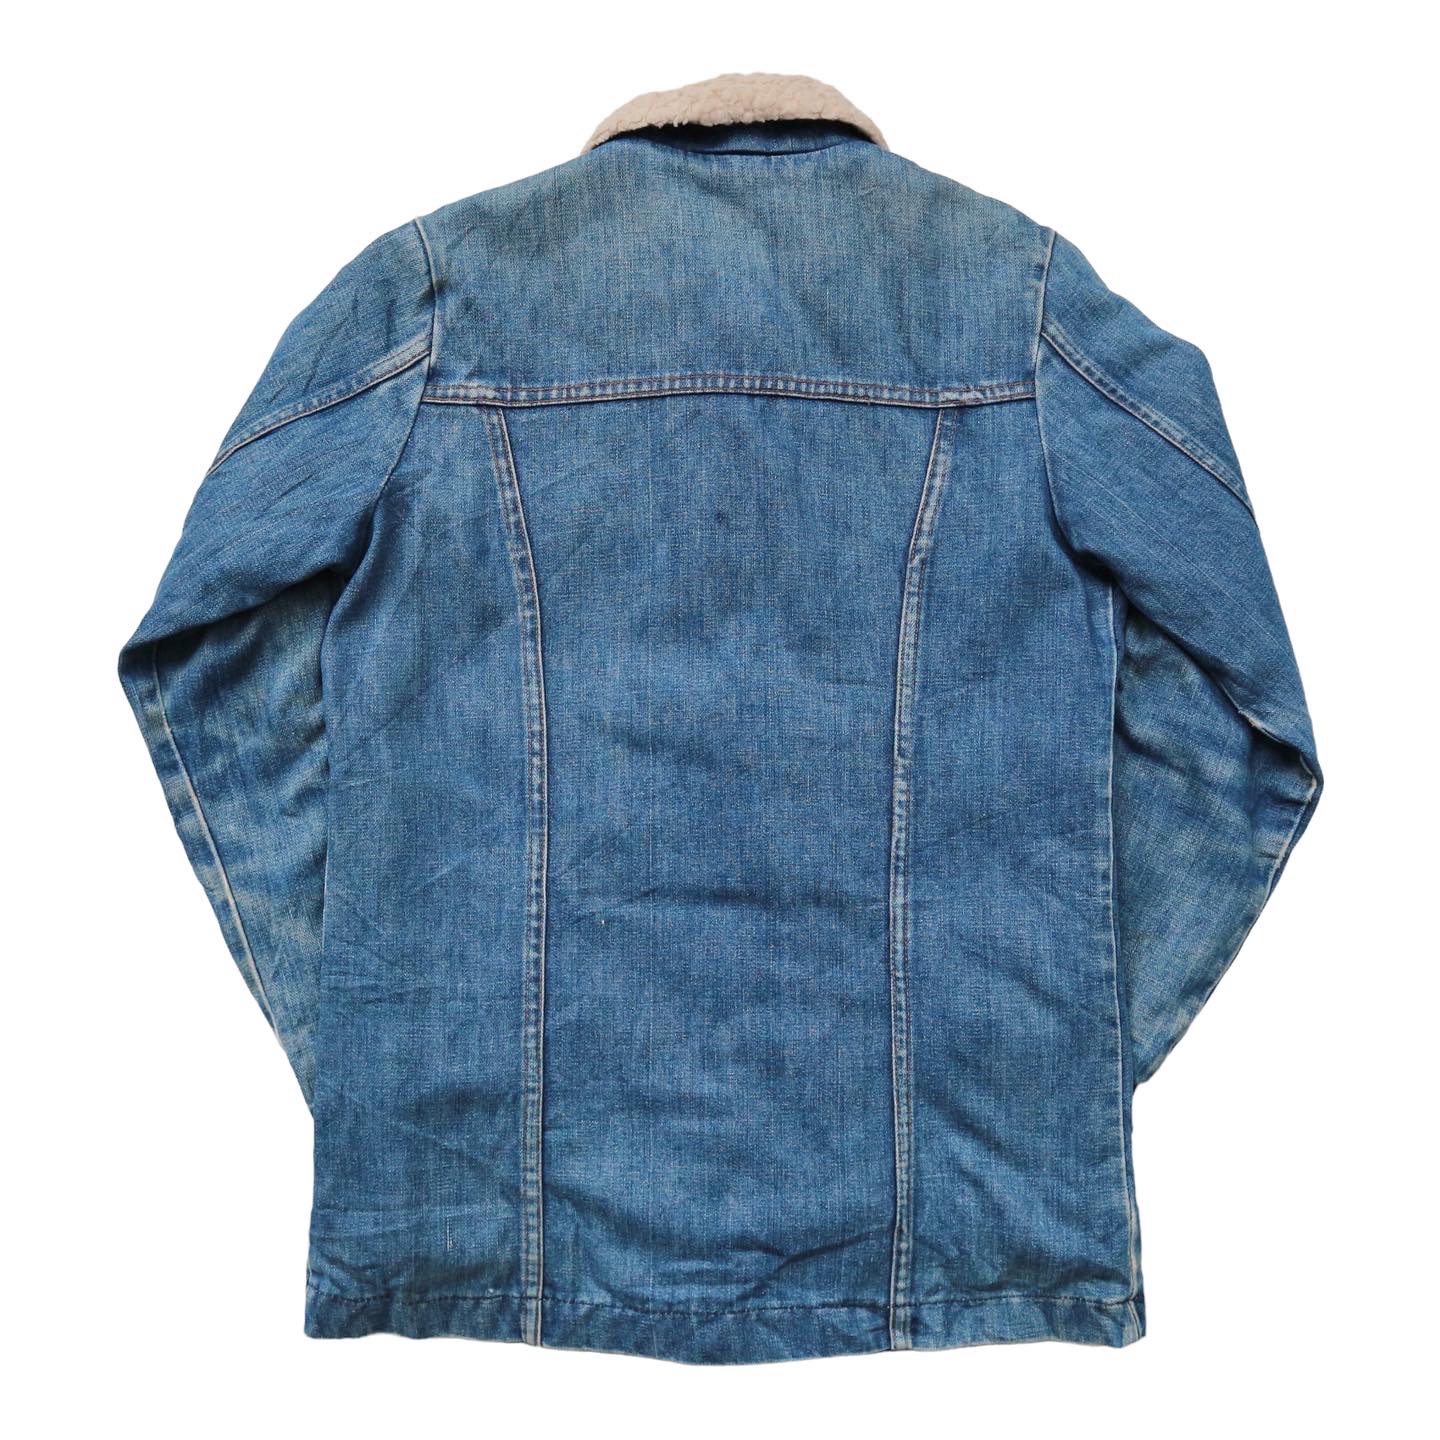 Vintage 80s Wrangler Denim Jacket Size S denimister